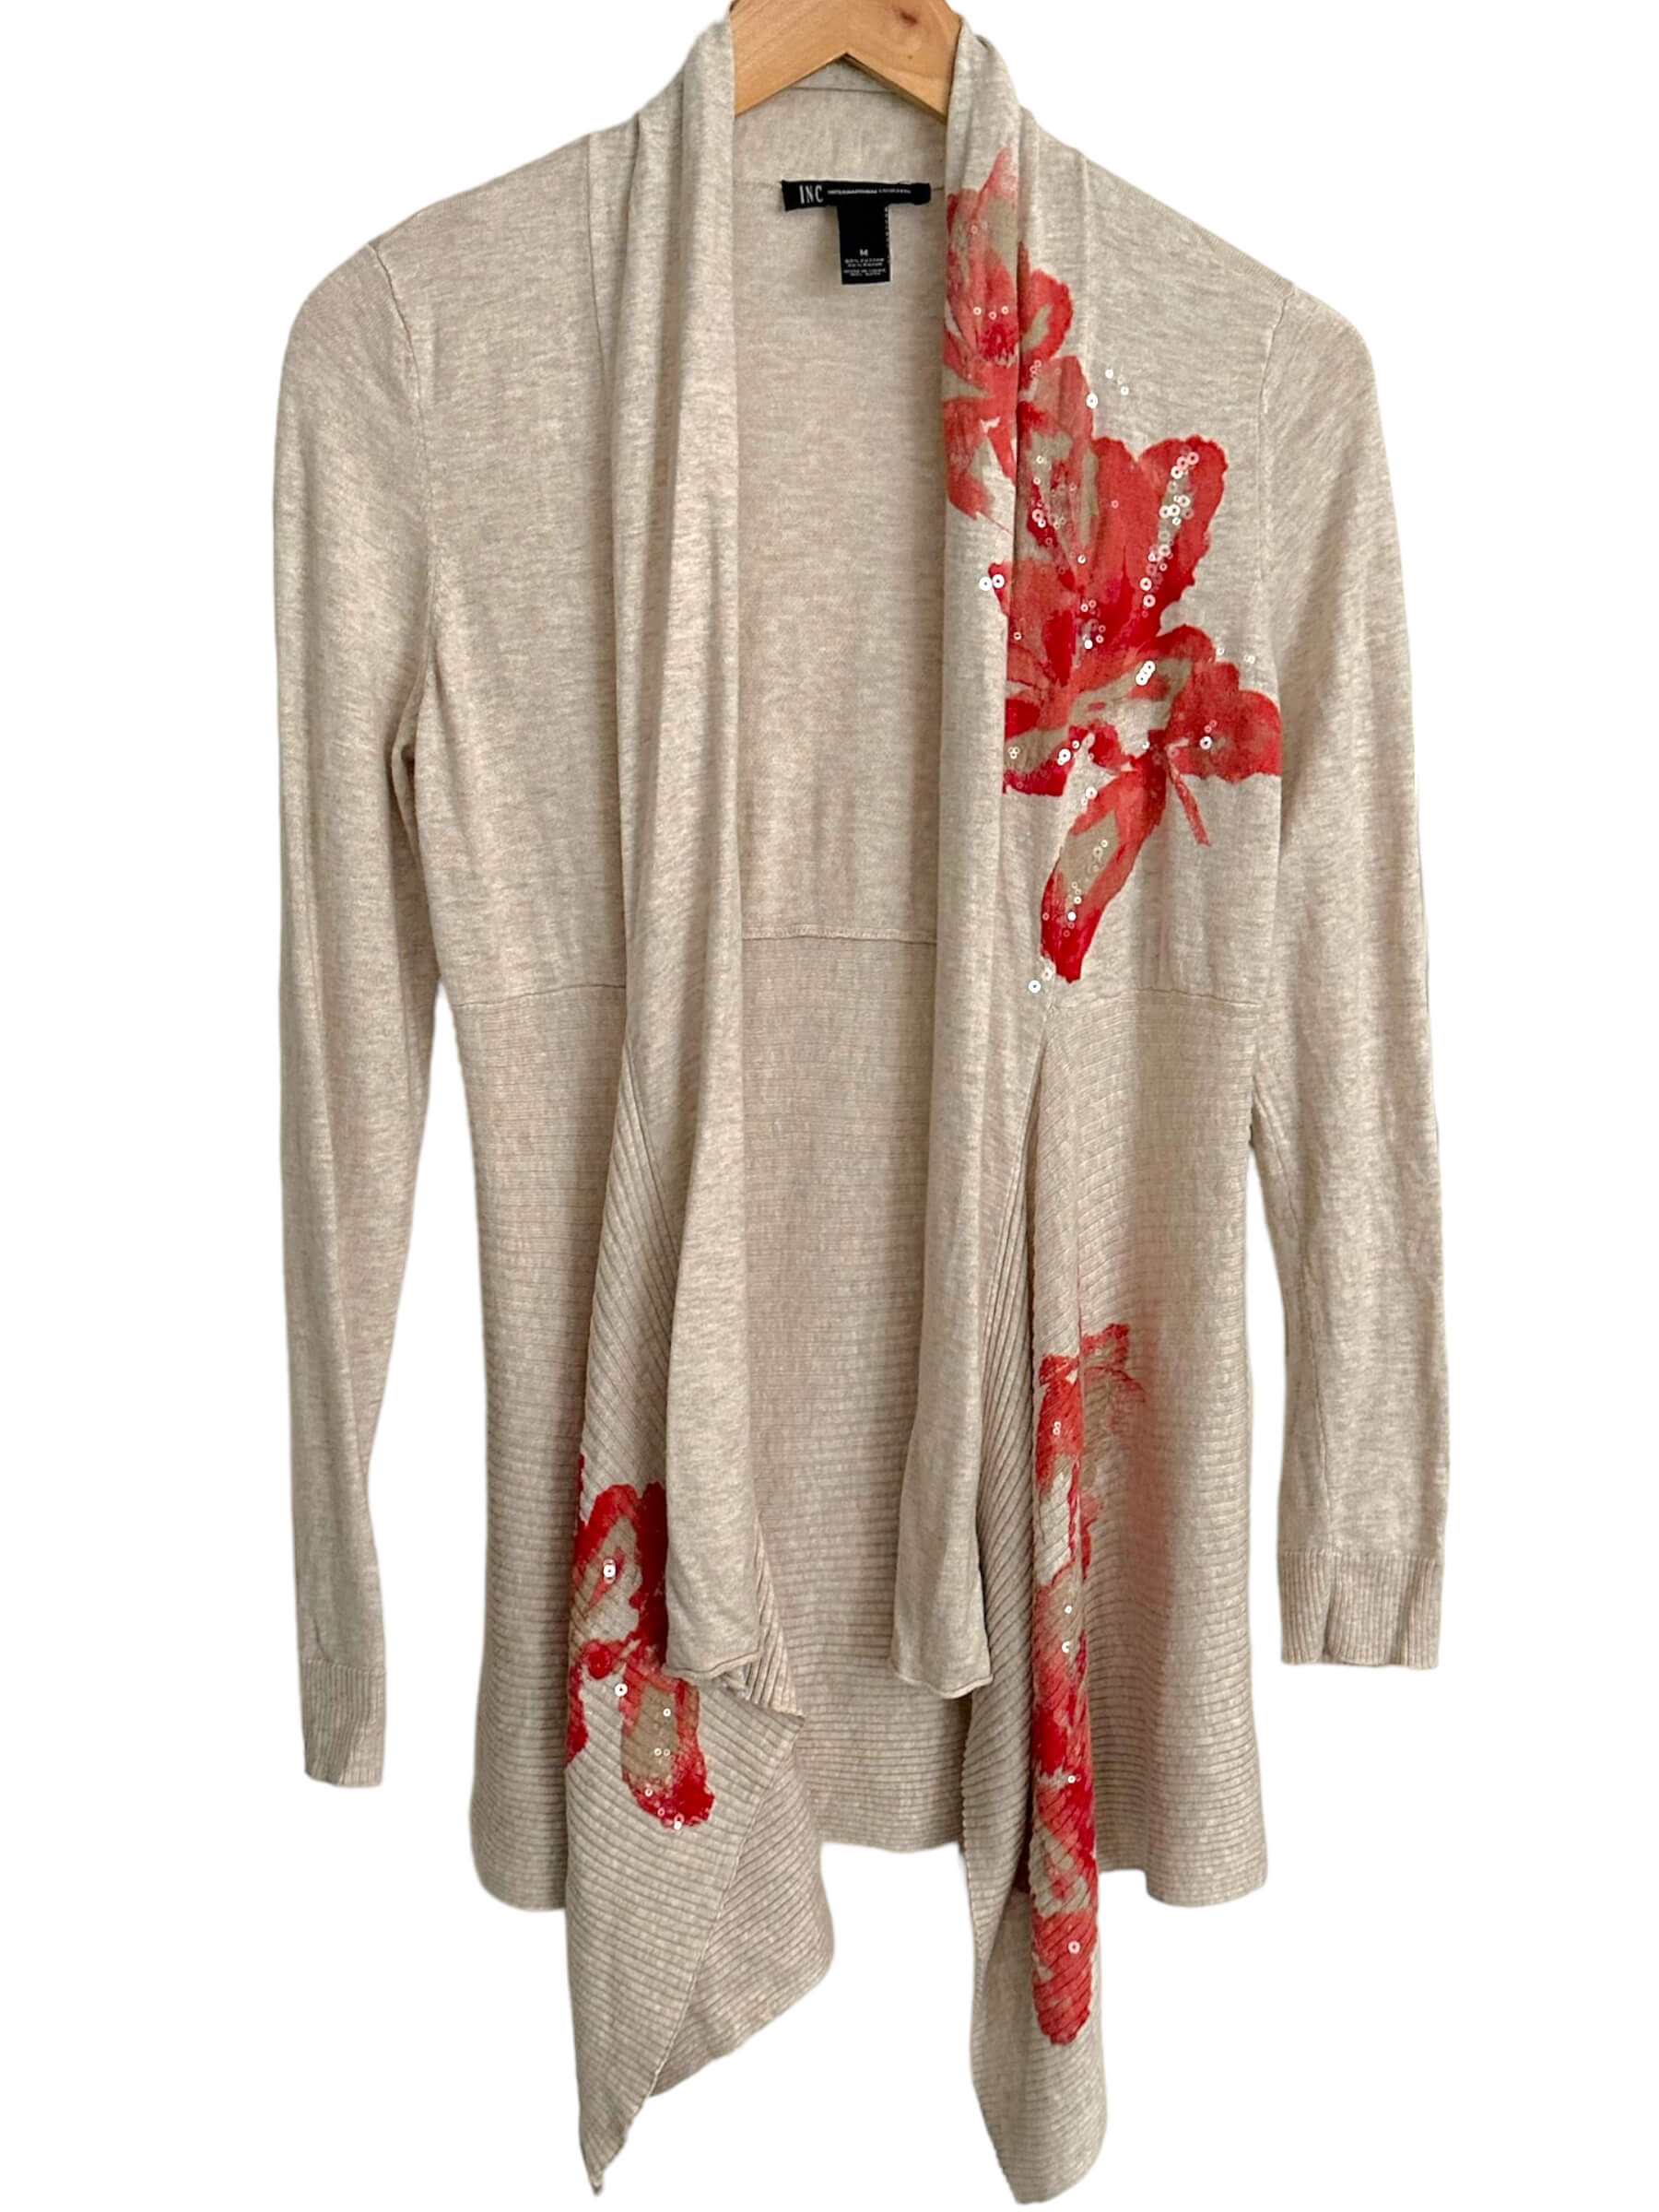 Soft Autumn INC INTERNATIONAL CONCEPTS sequin floral open cardigan sweater